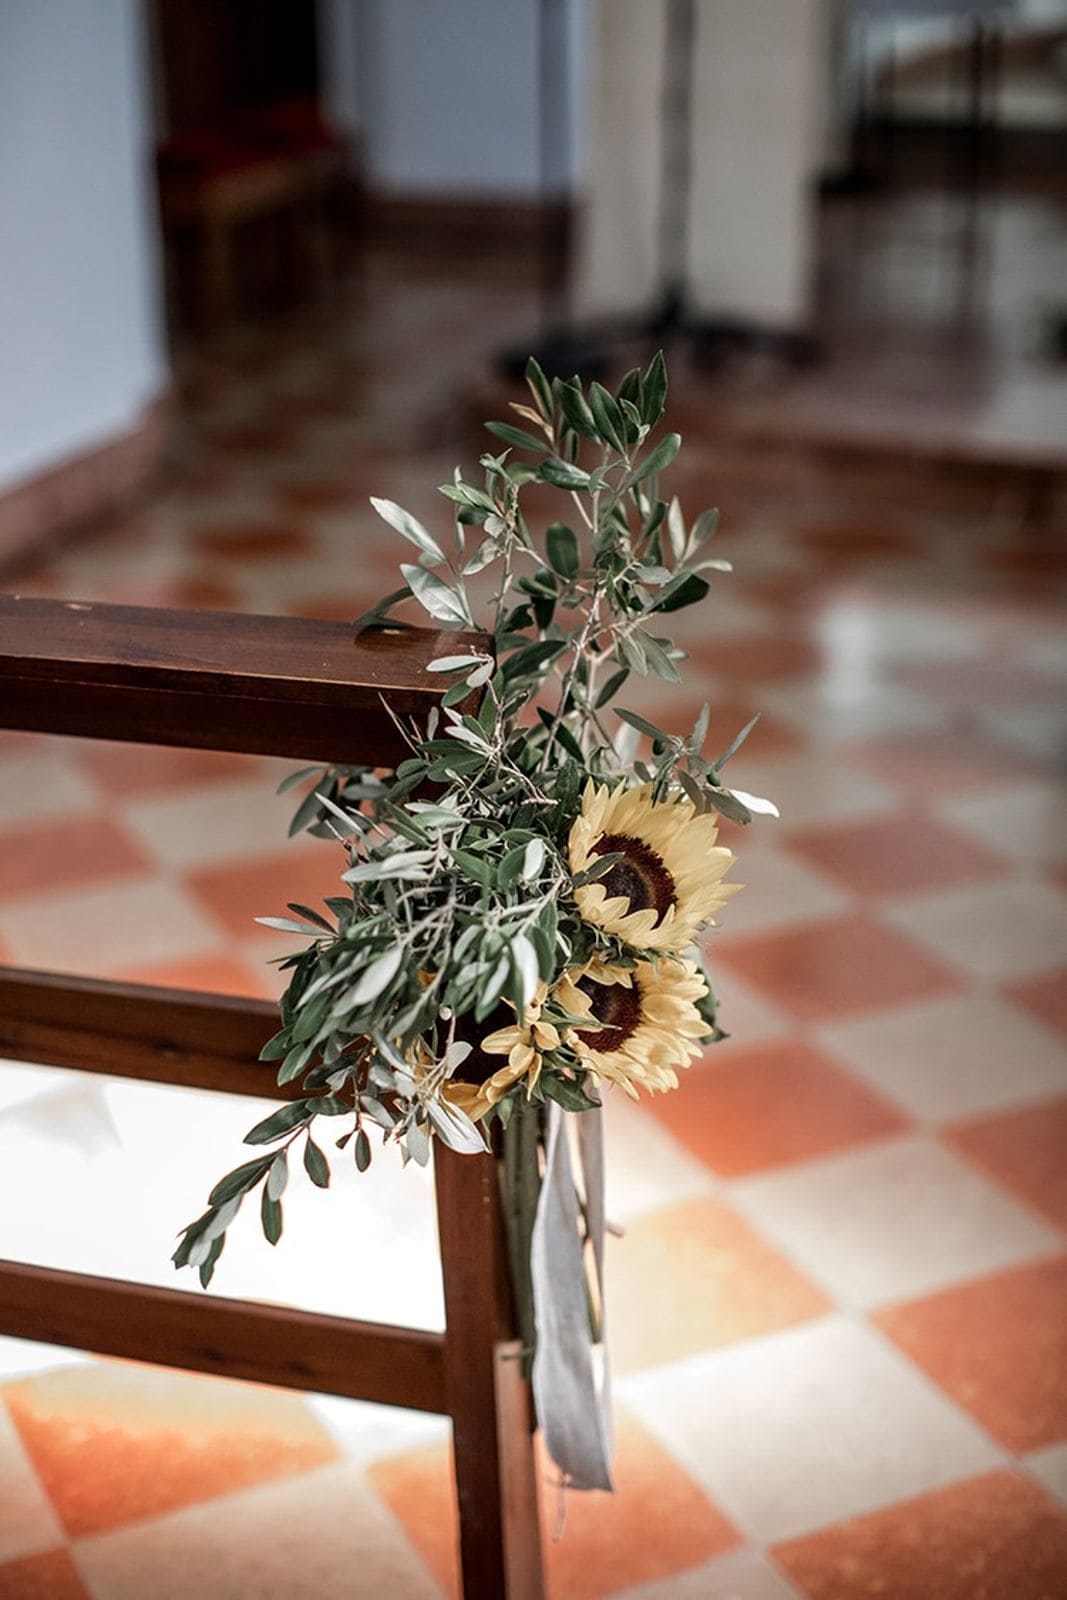 Sunflower rustic-chic floral arrangement in Catholic church wedding ceremony